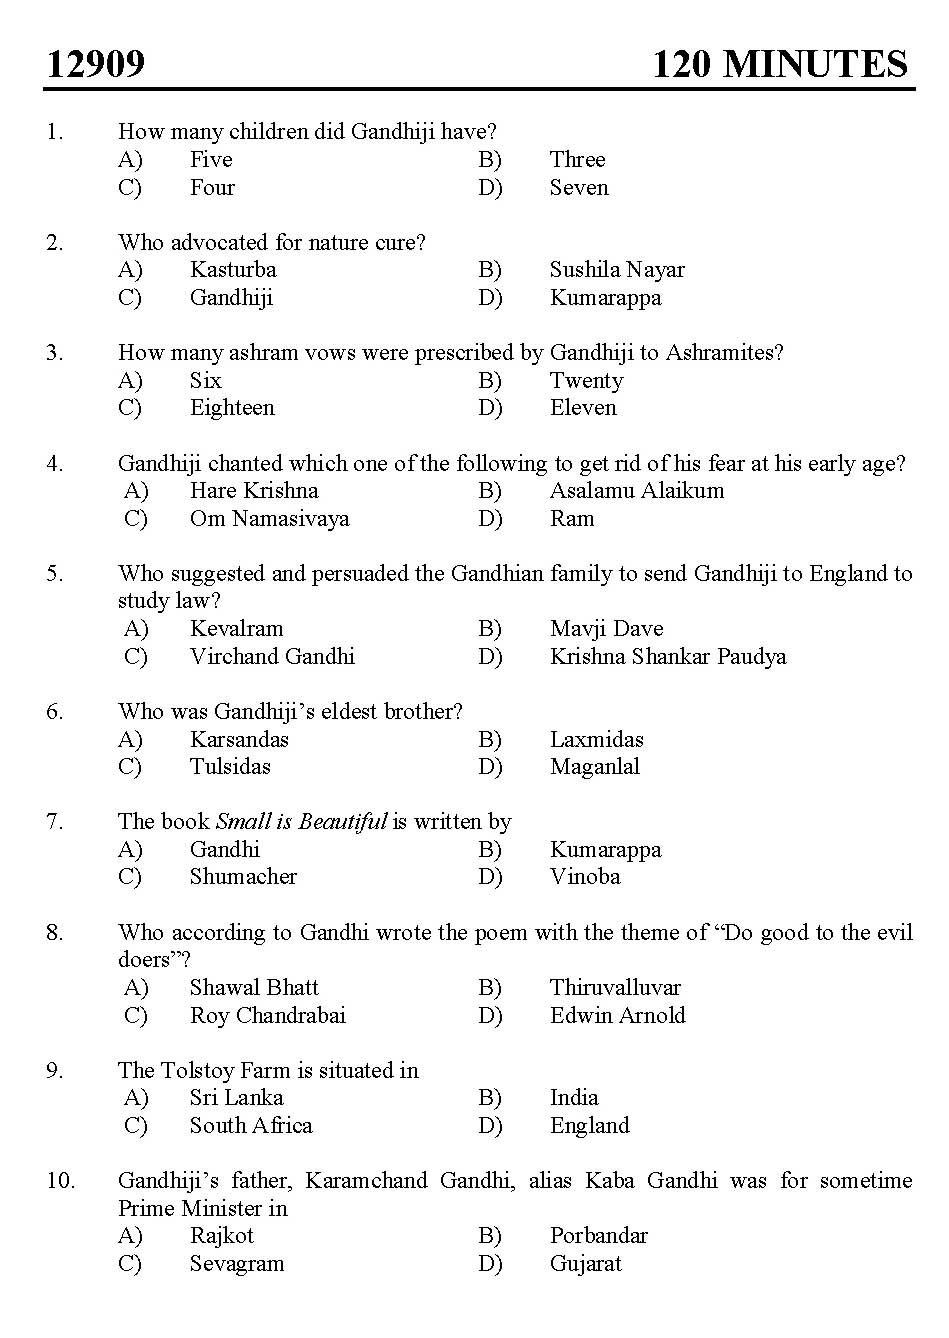 Kerala SET Gandhian Studies Exam 2012 Question Code 12909 1